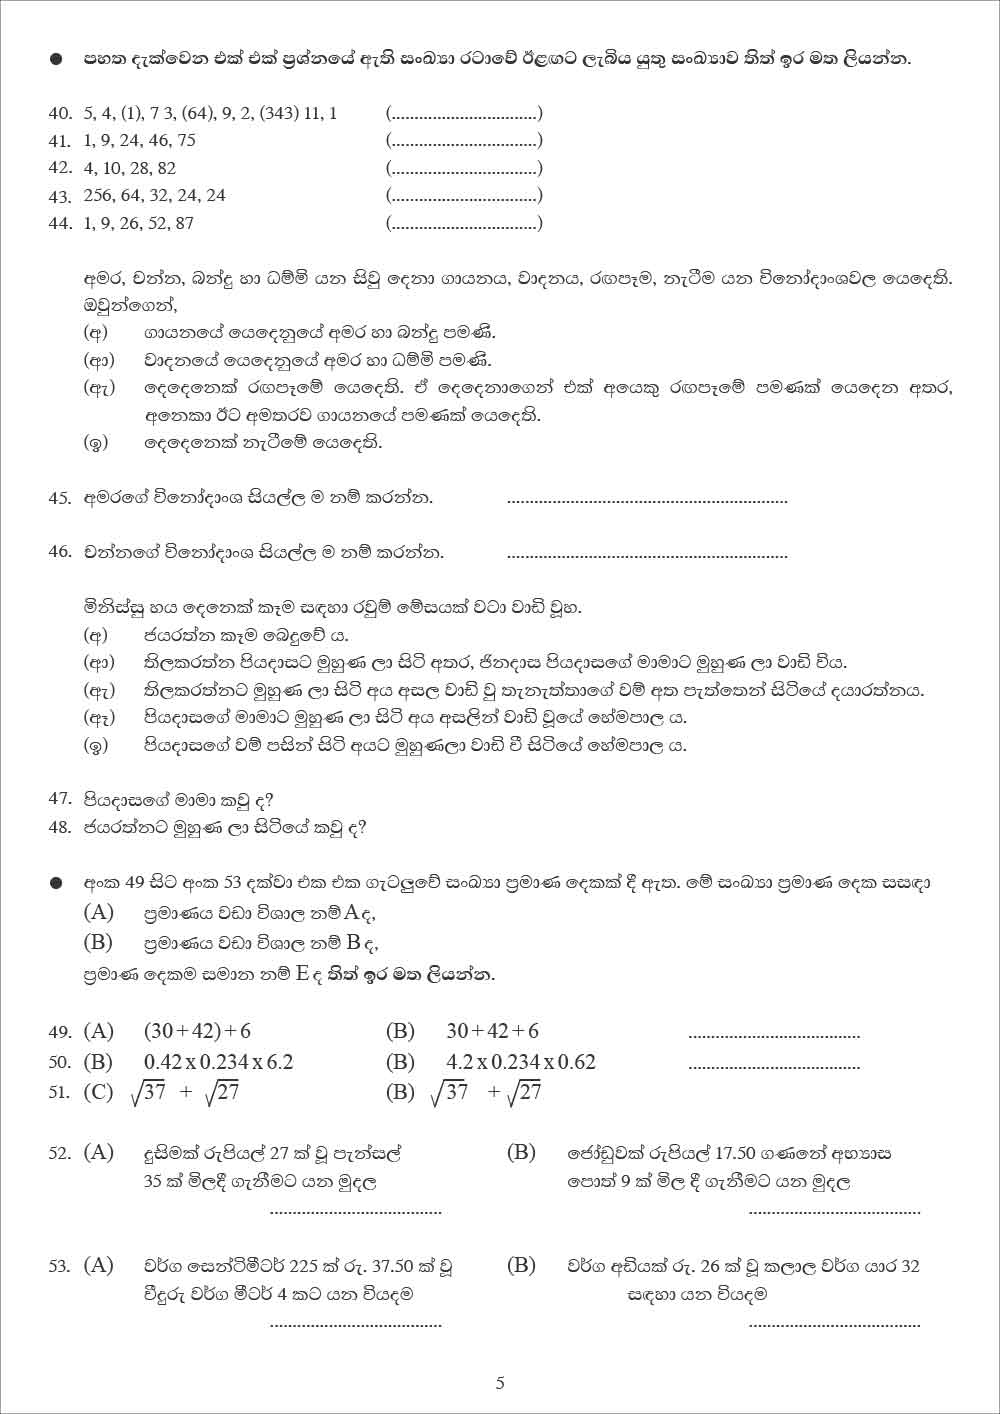 SLAS Pass Paper 07 by Anusha Gokula - General Knowledge in Sinhala 